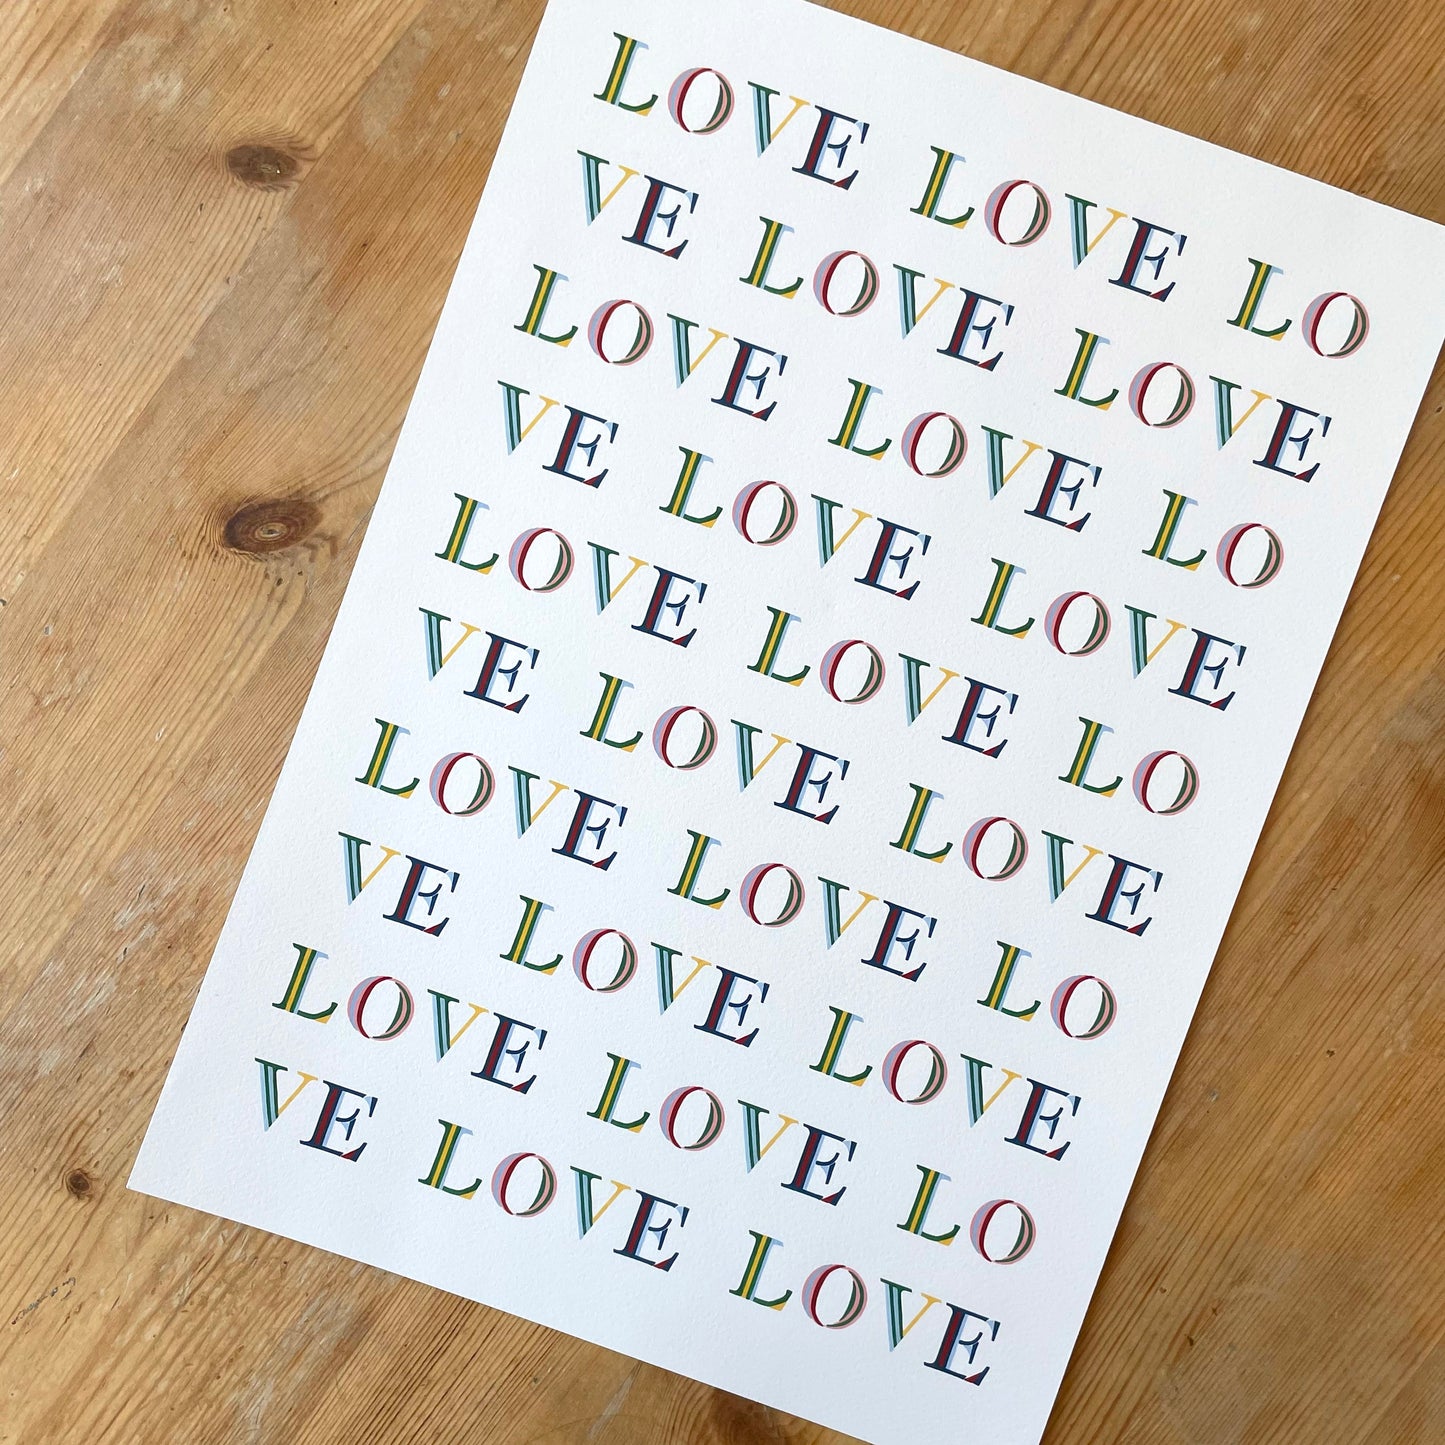 Love A3 Print (Second)